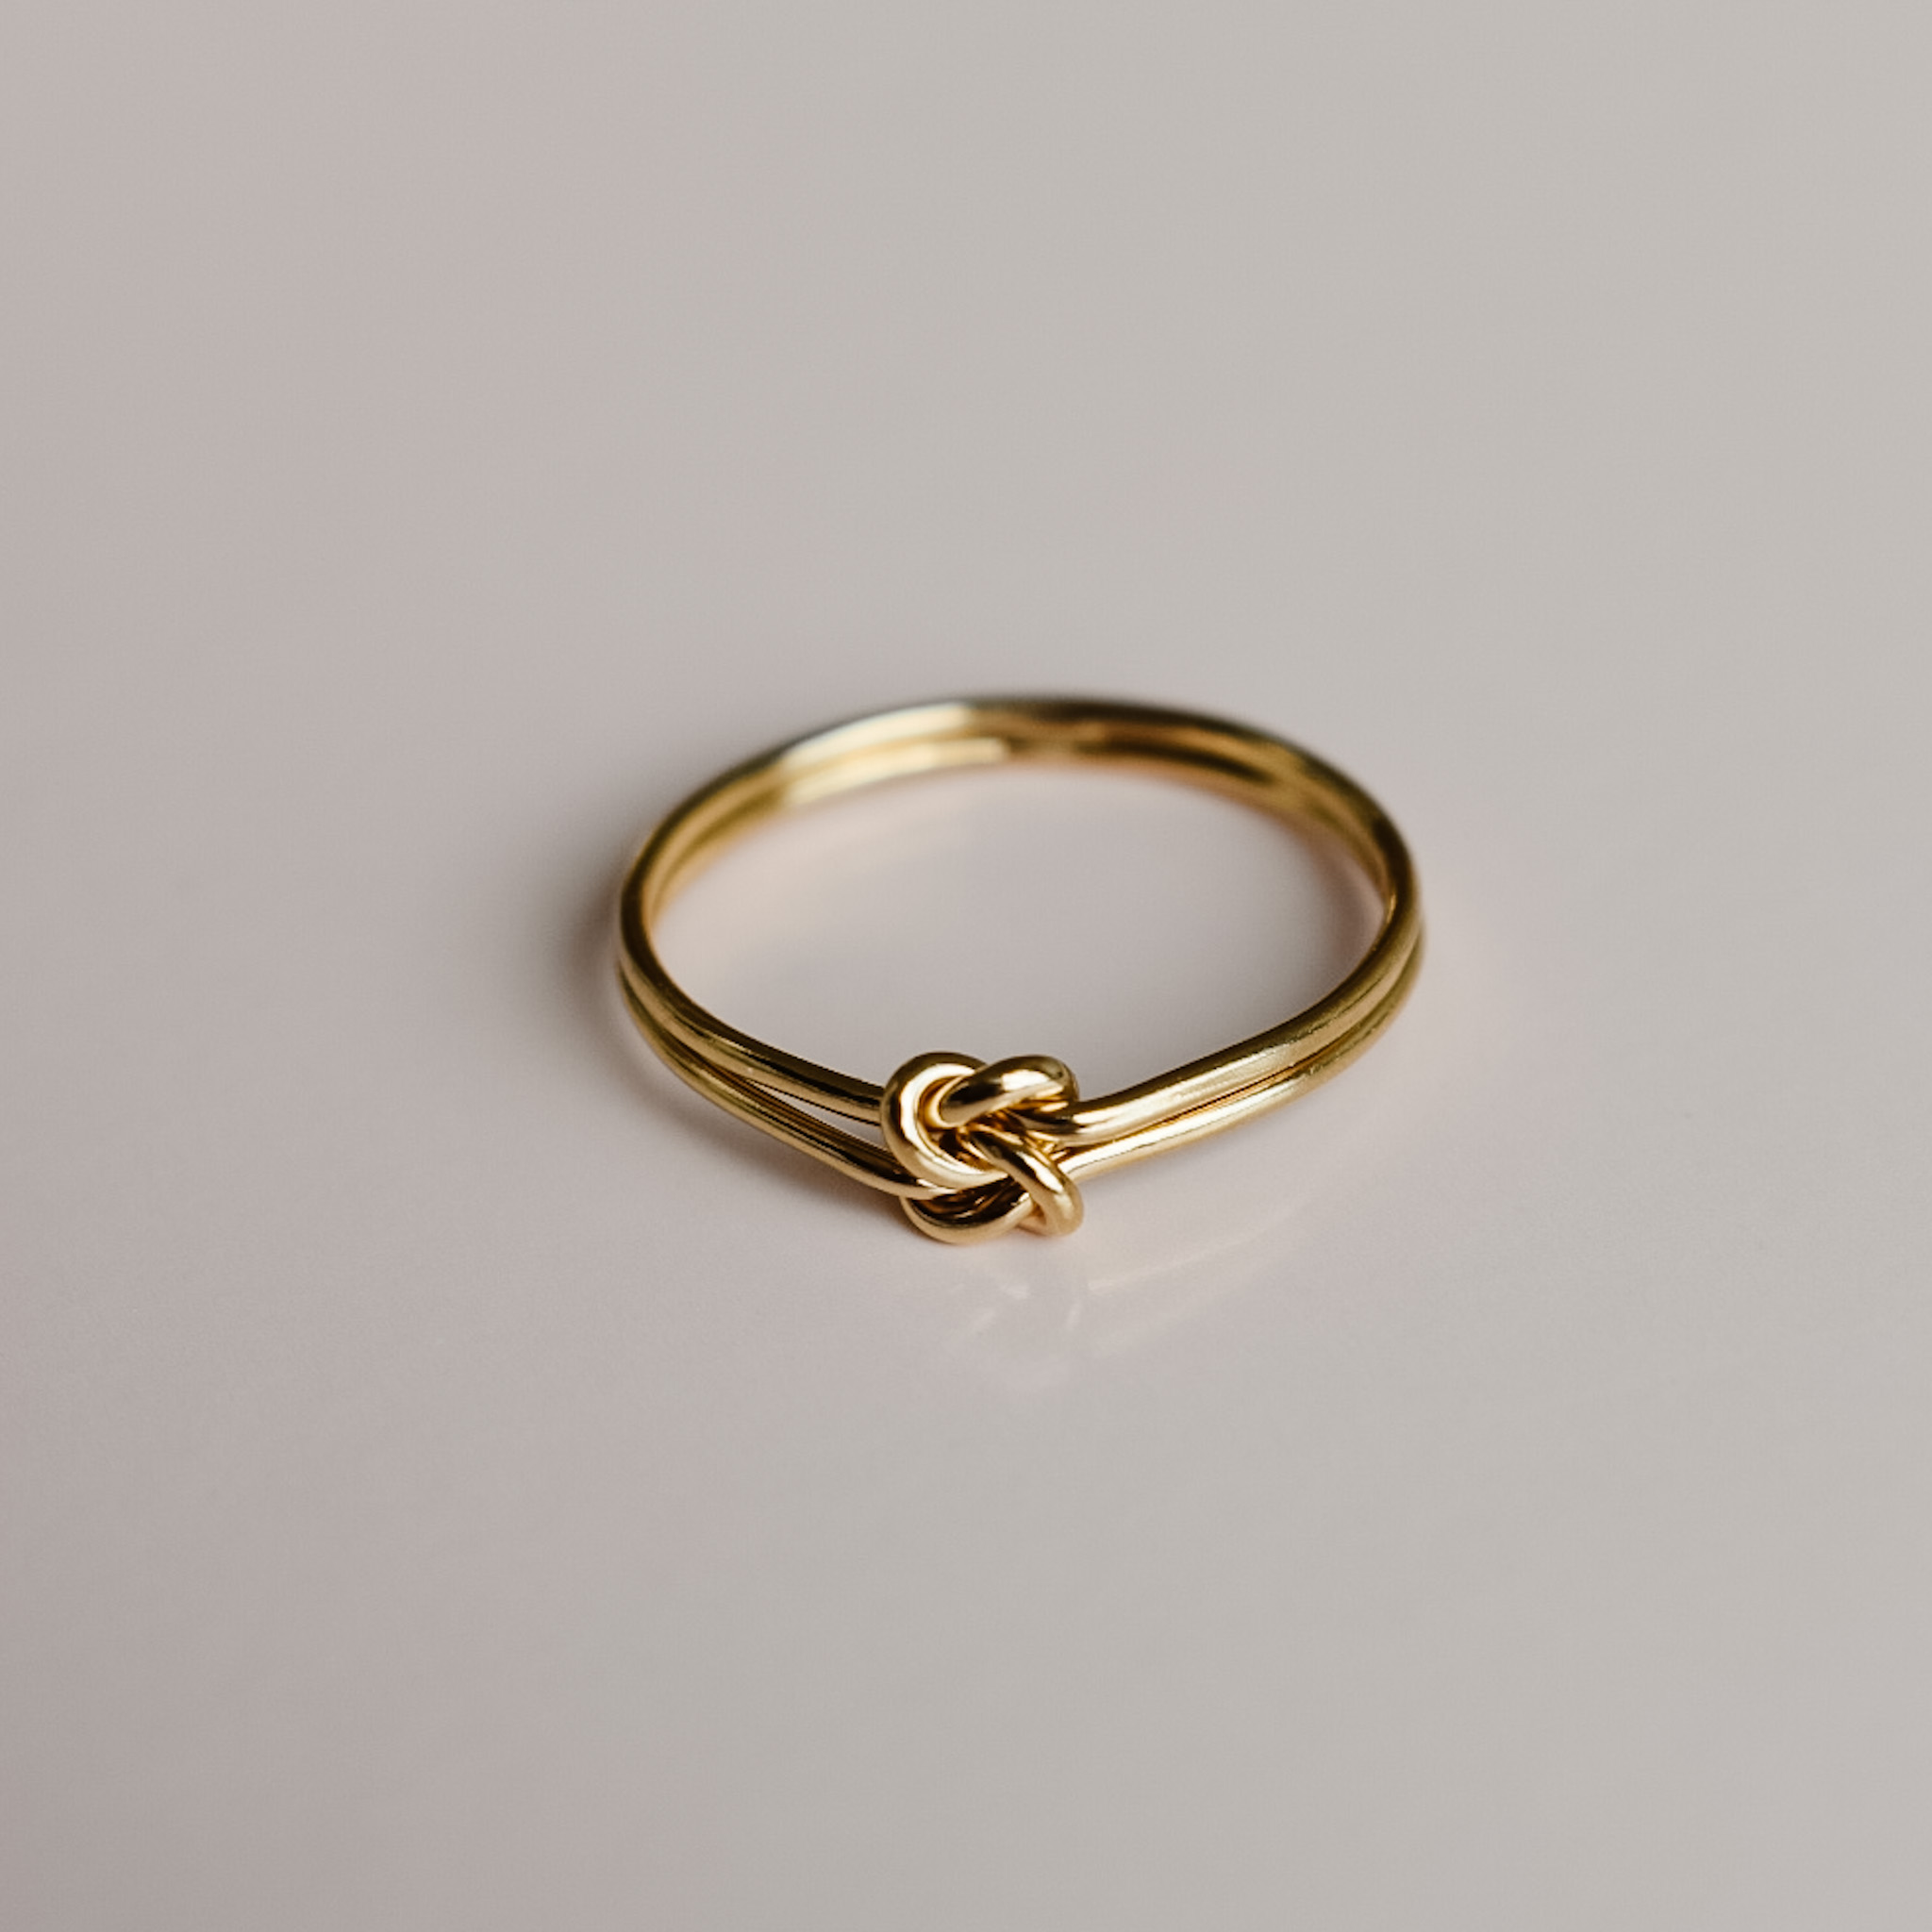 Stacking Rings Sale Silver Jewelry Bracelets Rings 14k Gold FIlled Stretch Bracelet14